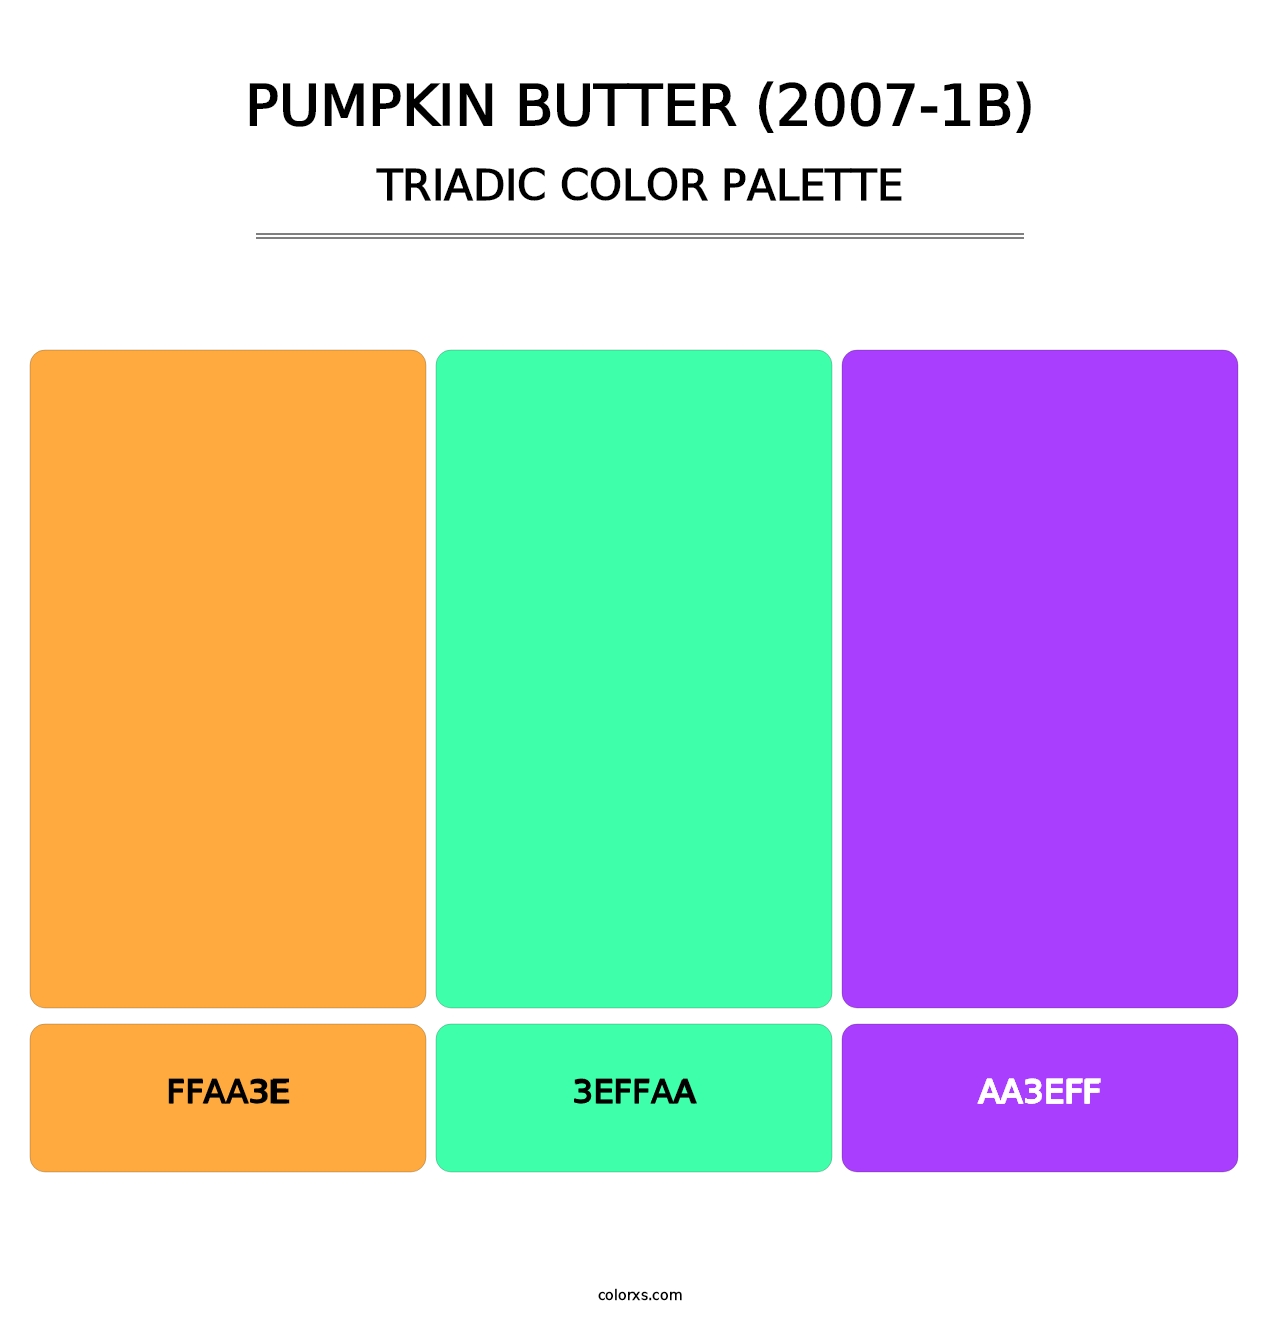 Pumpkin Butter (2007-1B) - Triadic Color Palette